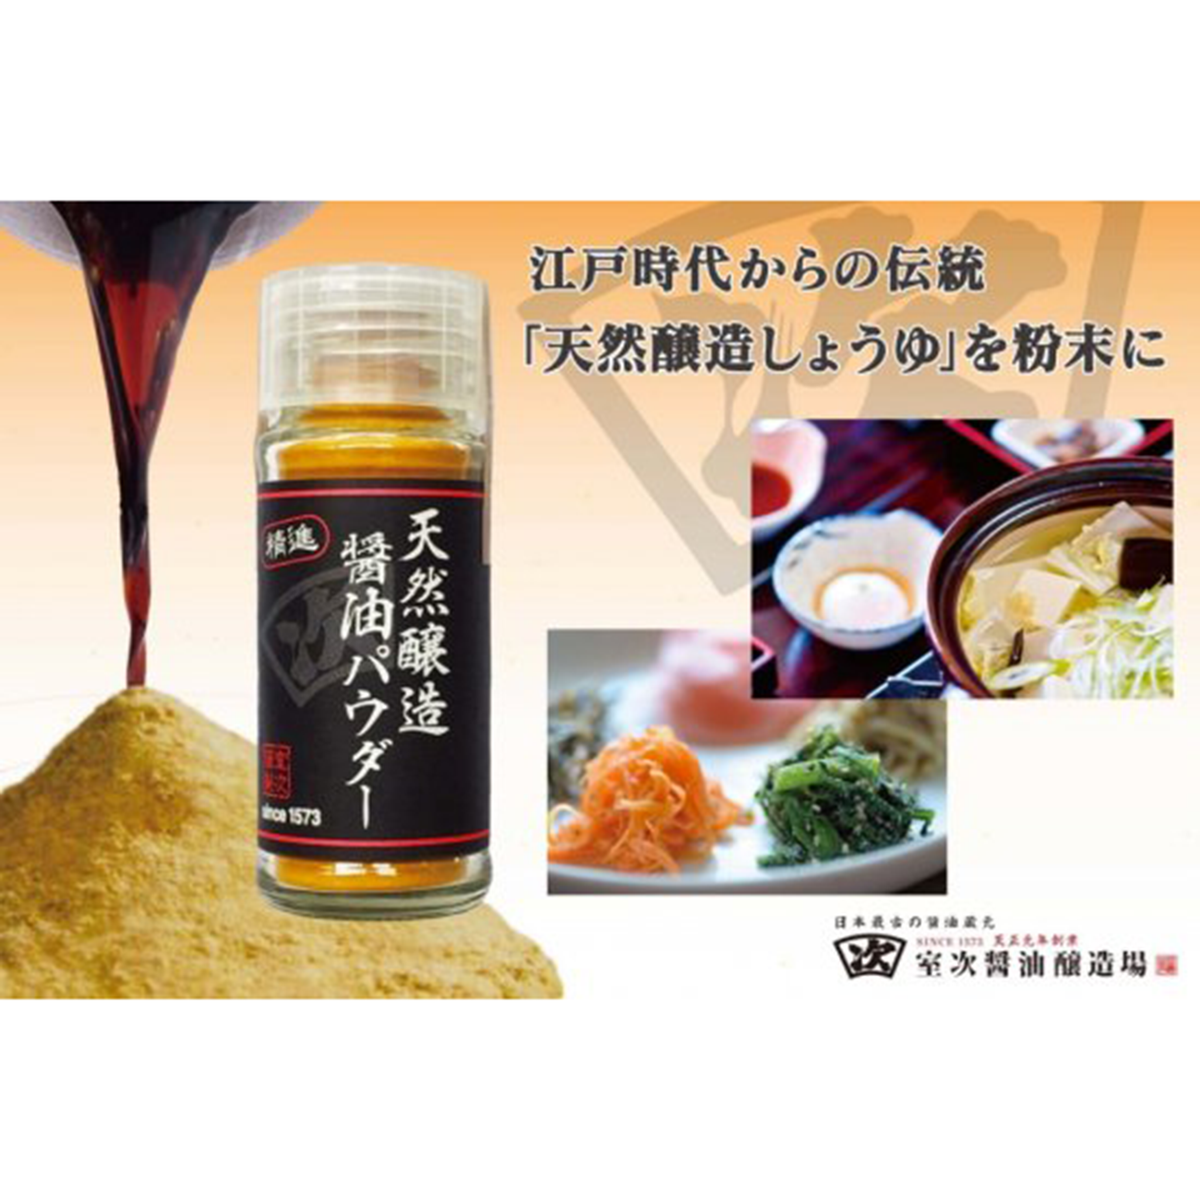 MUROJI】Natural brewed soy sauce powder 天然醸造醤油パウダー 20g – the rice factory  New York